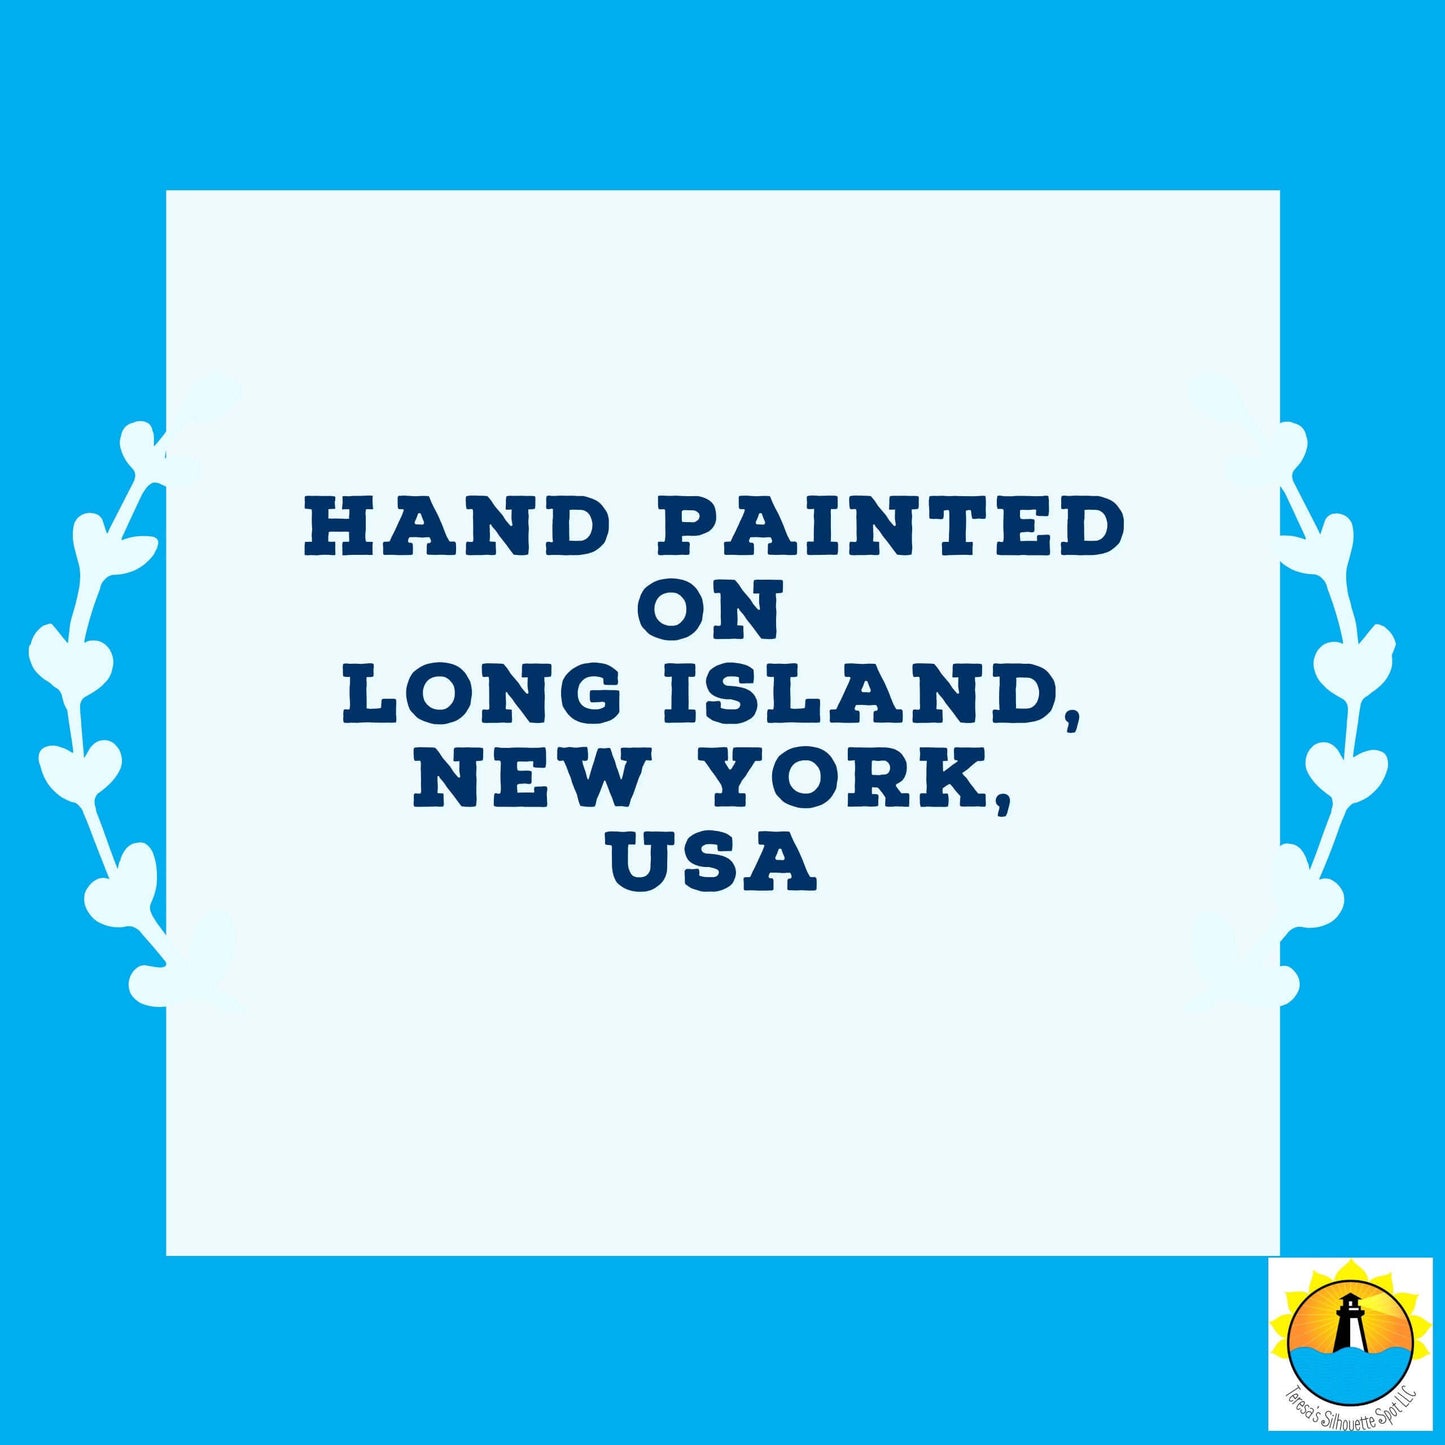 Hand paint on Long Island